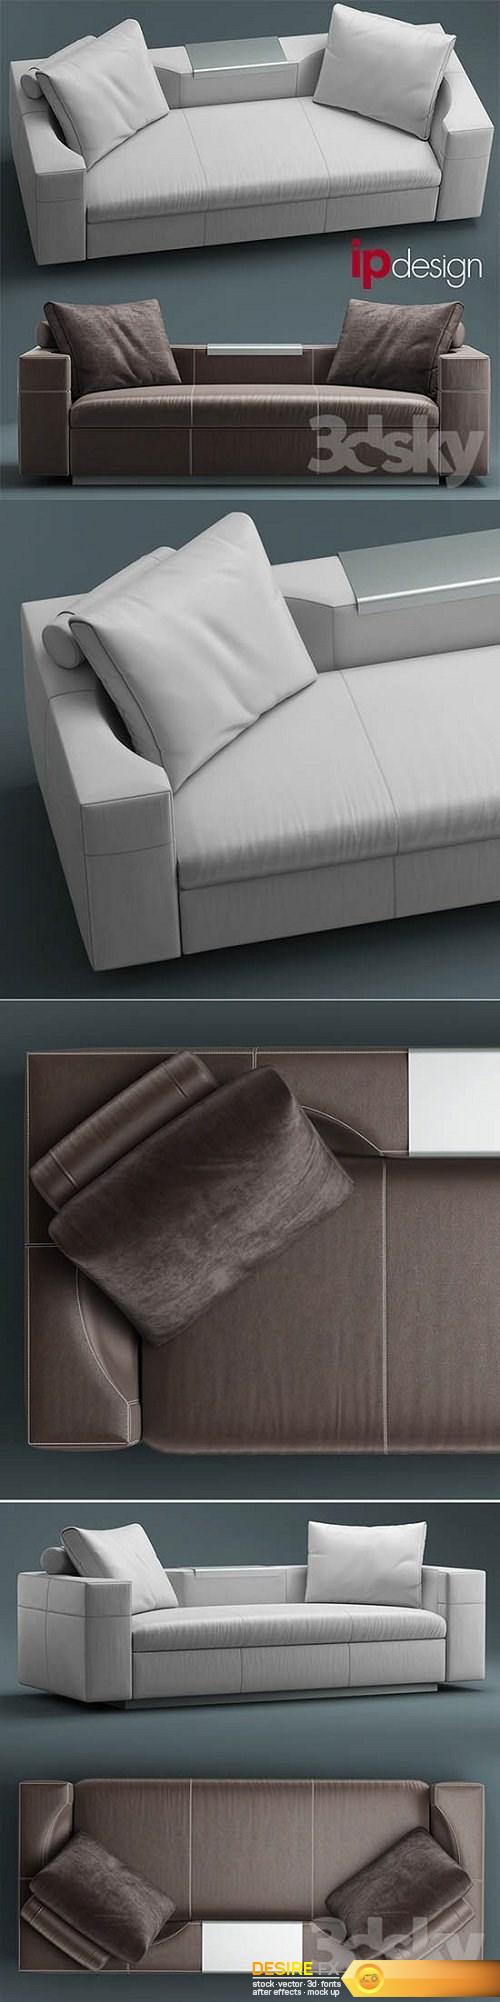 Sofa ipdesign oasis 3d Model